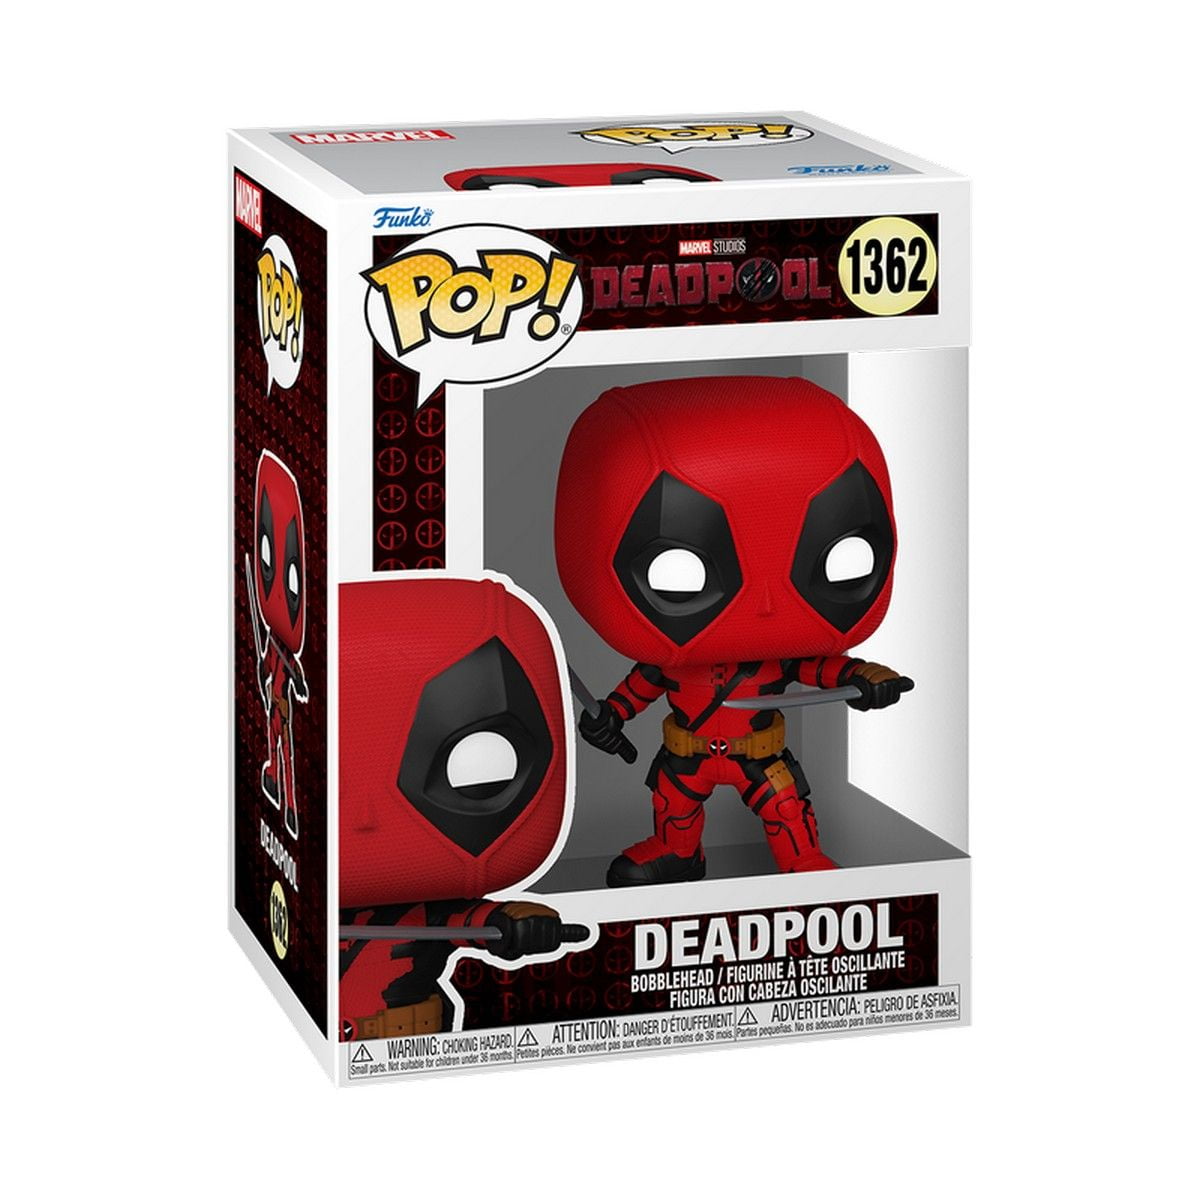 Deadpool with Swords - Deadpool 3 - Funko POP! Marvel (1362)